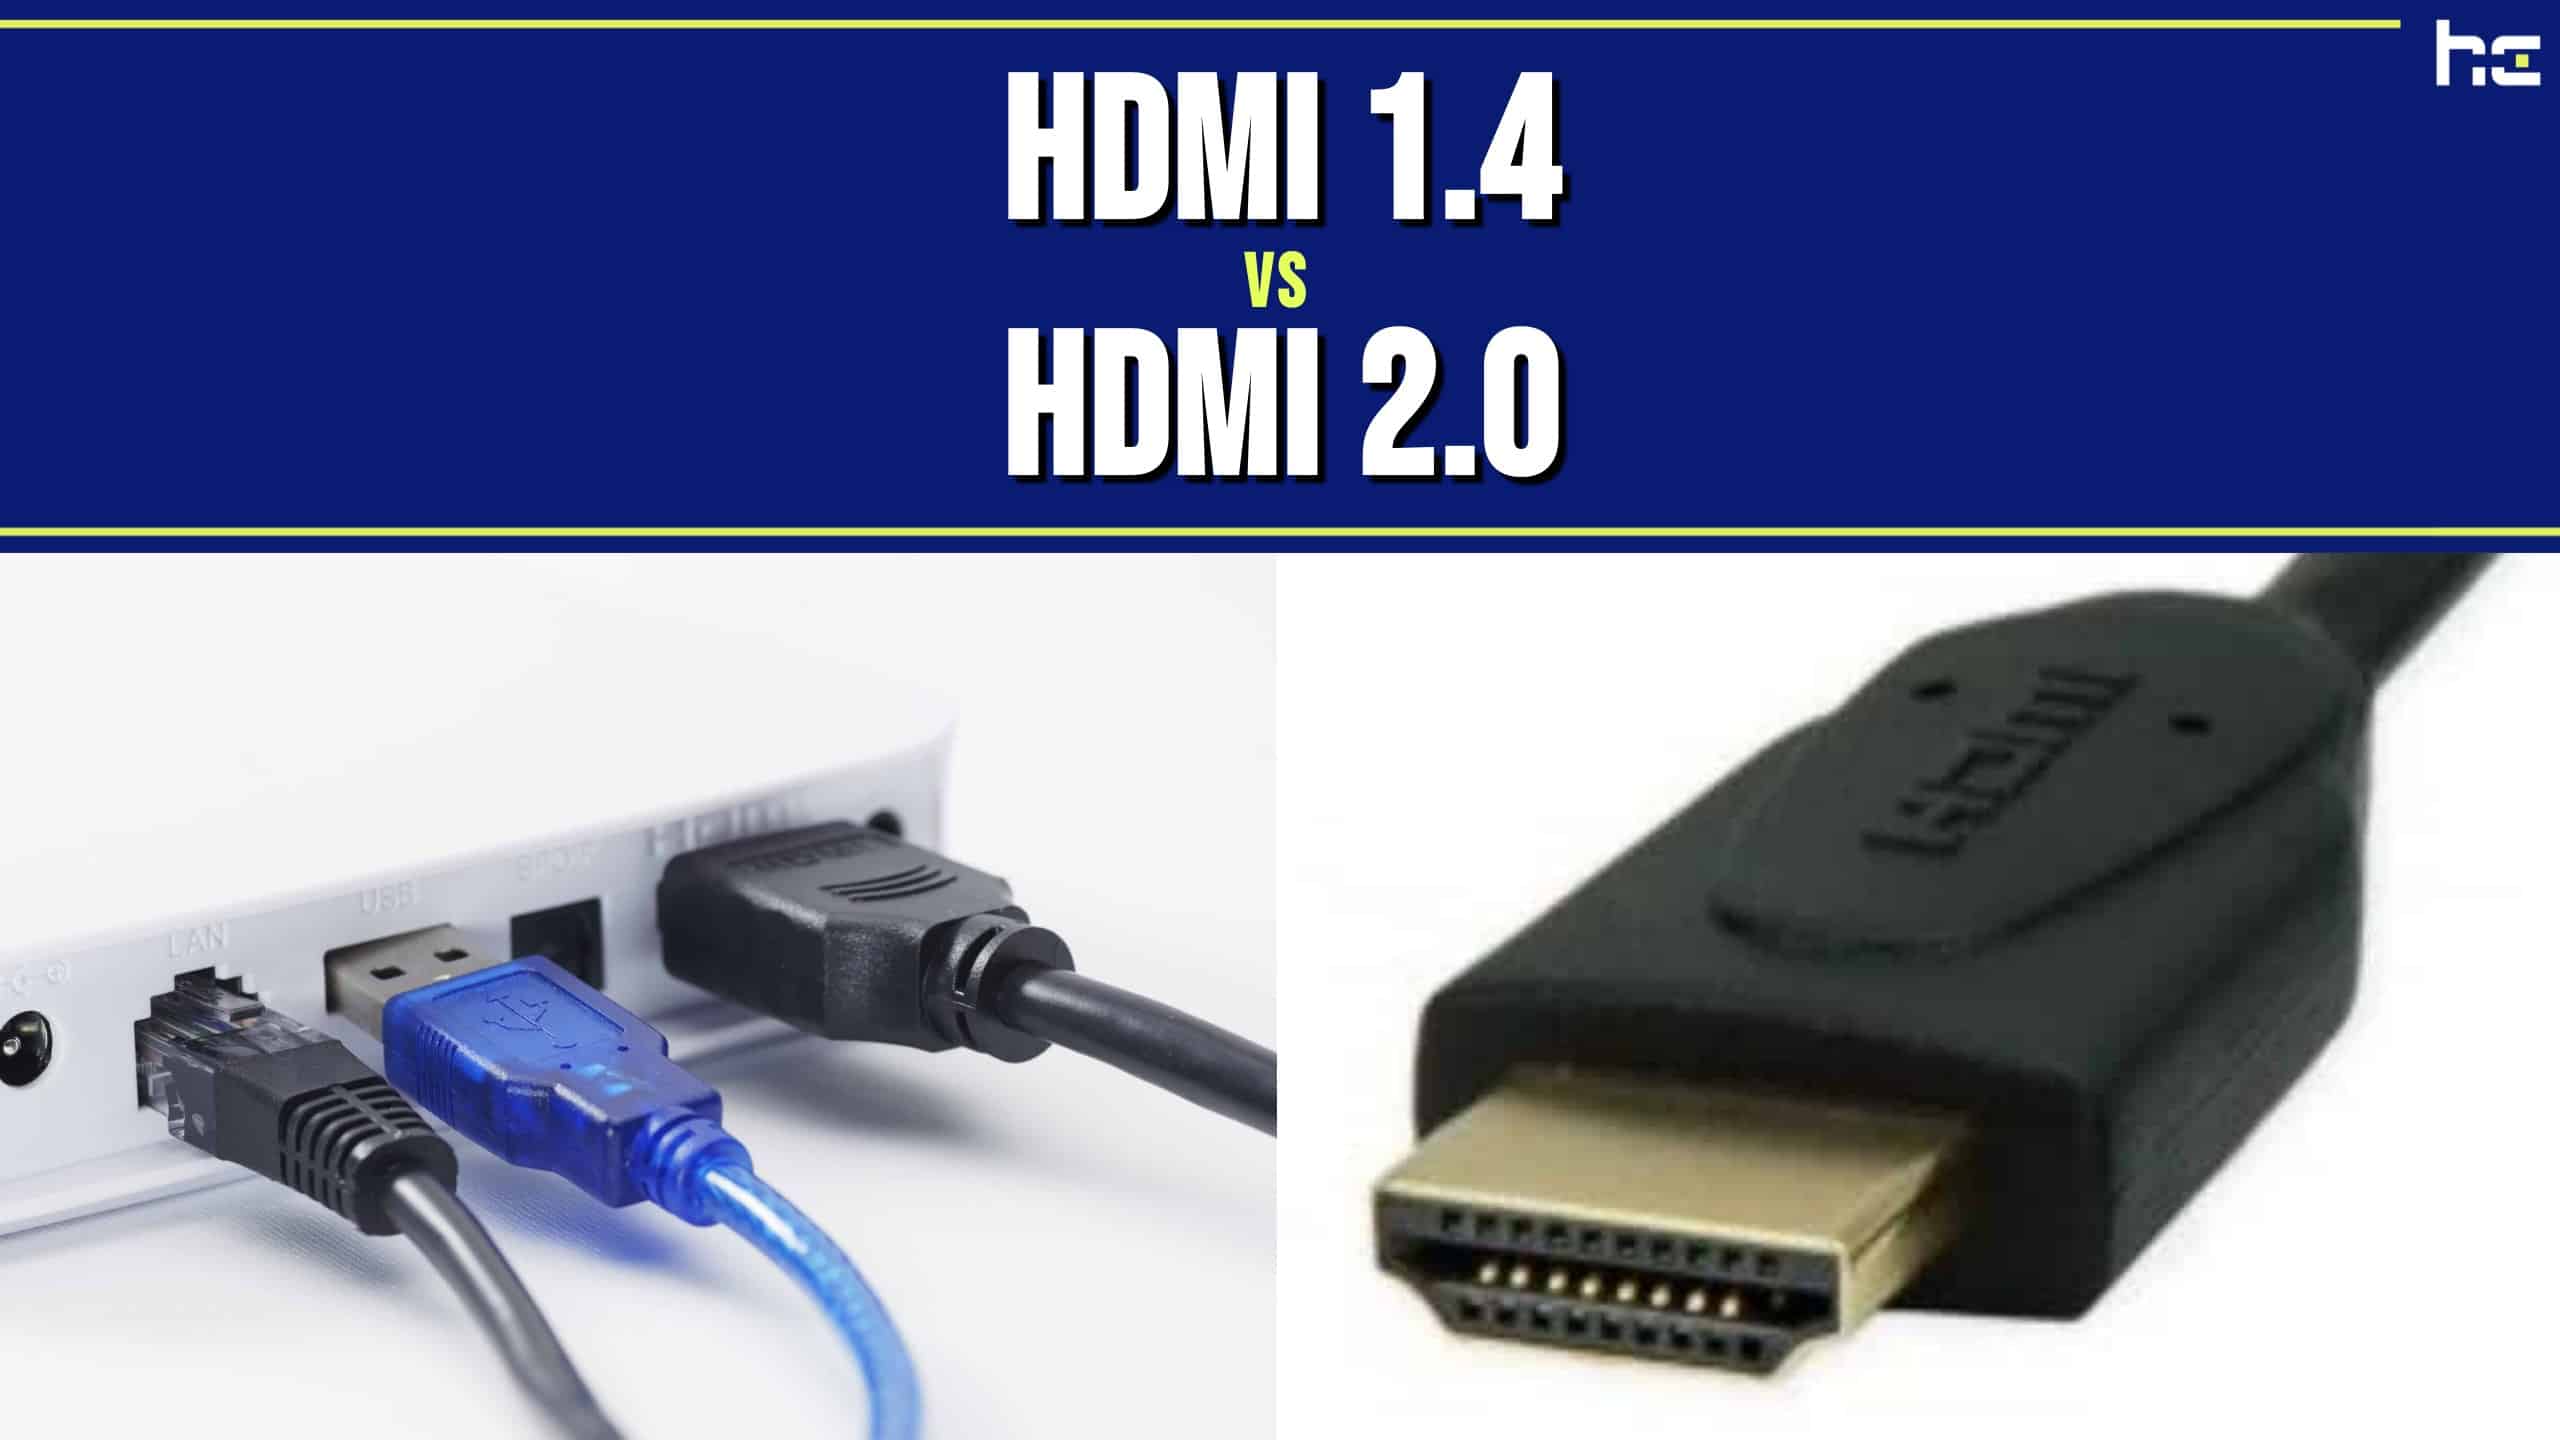 12 Amazing Vga HDMI for 2023